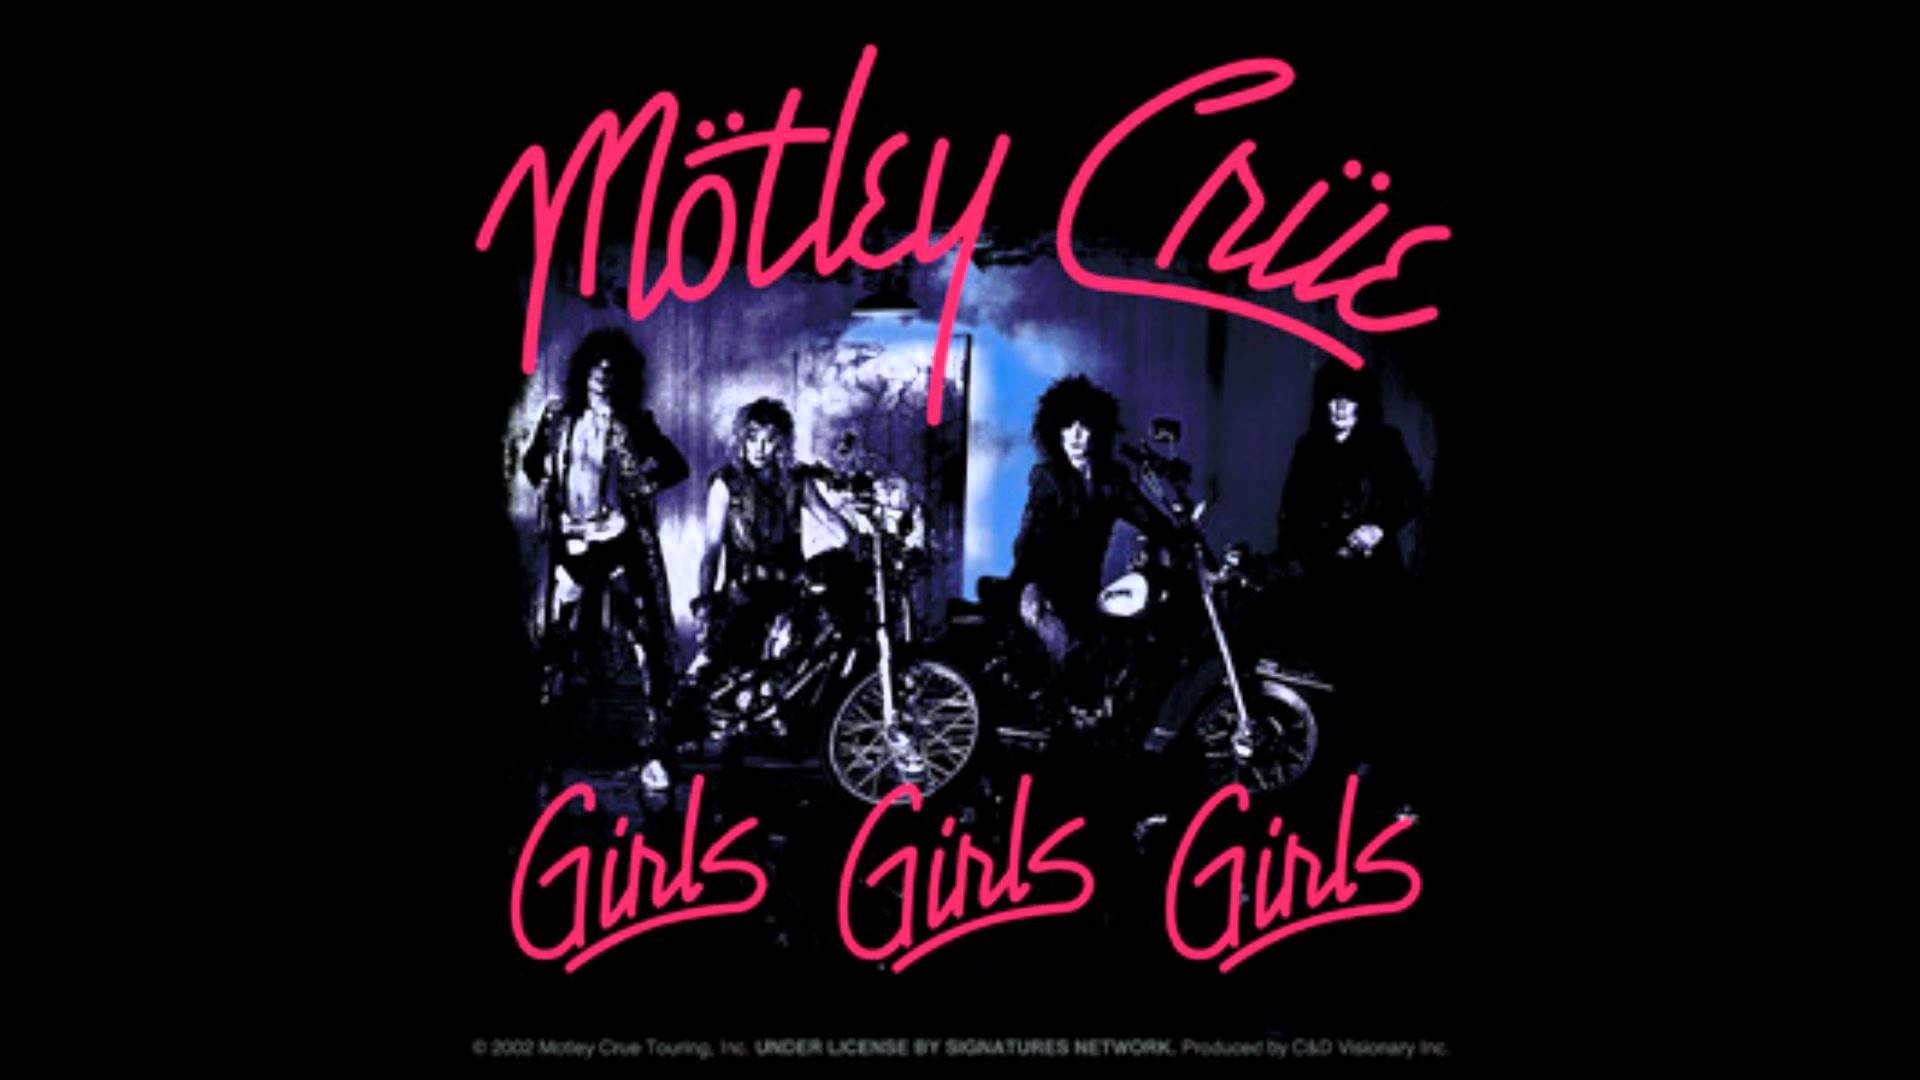 1920x1080 Motley Crue - Girls girls girls drums backing track w/vocals - YouTube